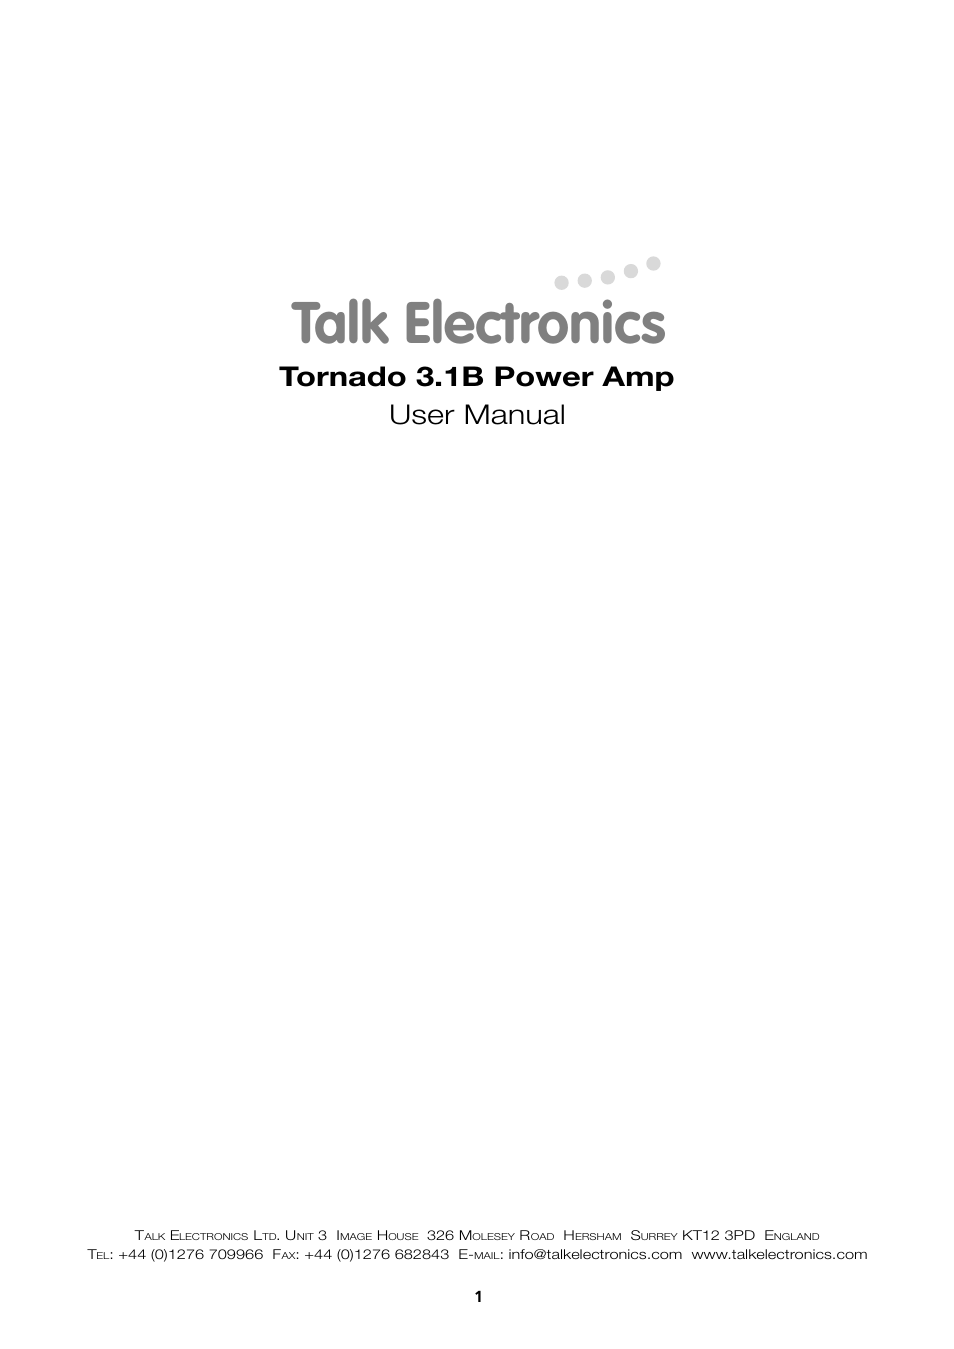 Tornado 3.1B Power Amplifier